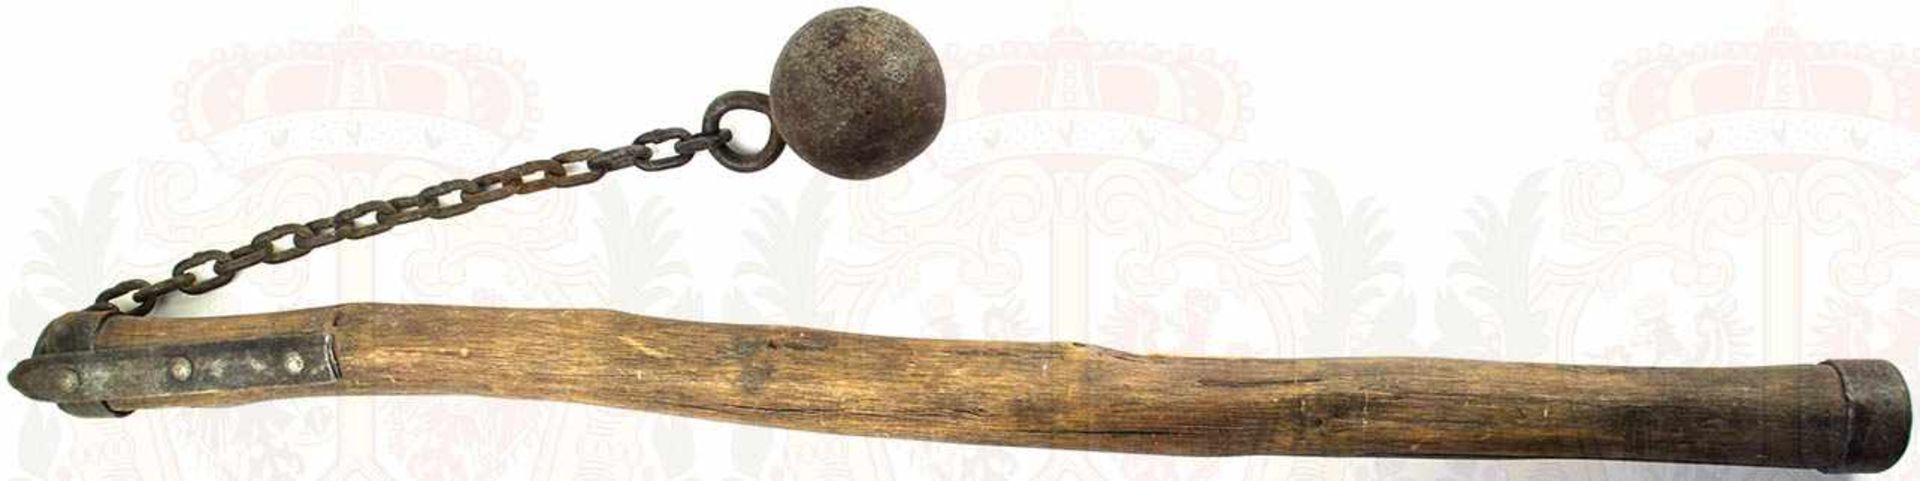 MORGENSTERN, eiserne Kugel ohne Dornen, Ø 7cm, an geschmiedeter Kette, L. 34 cm, Holzschaft m.